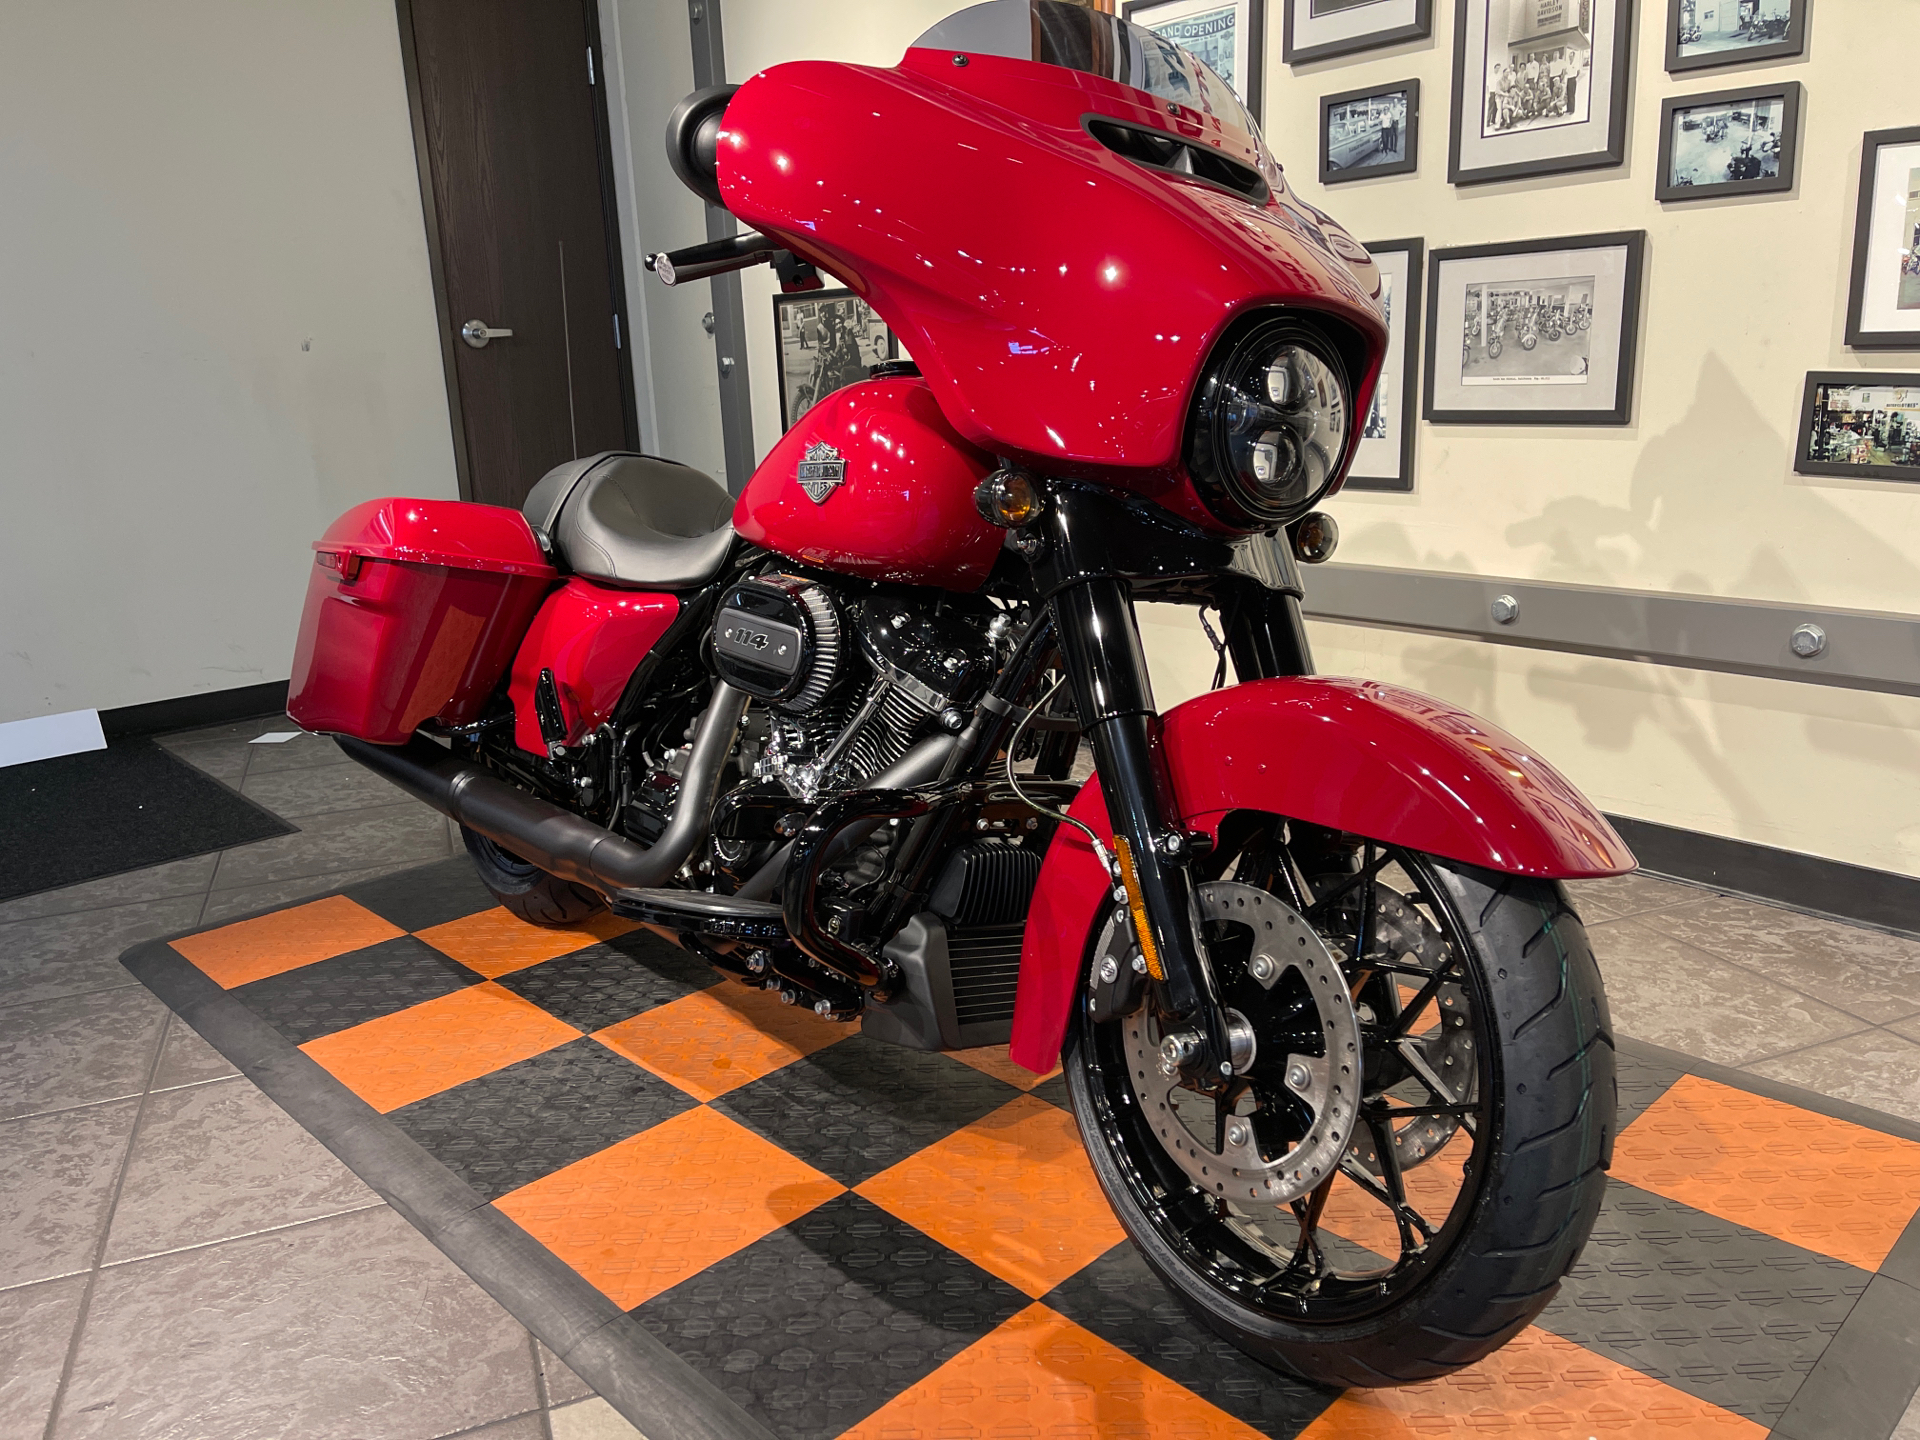 New 2021 Harley Davidson Street Glide Special Billiard Red Black Pearl Option Baldwin Park Ca 29174